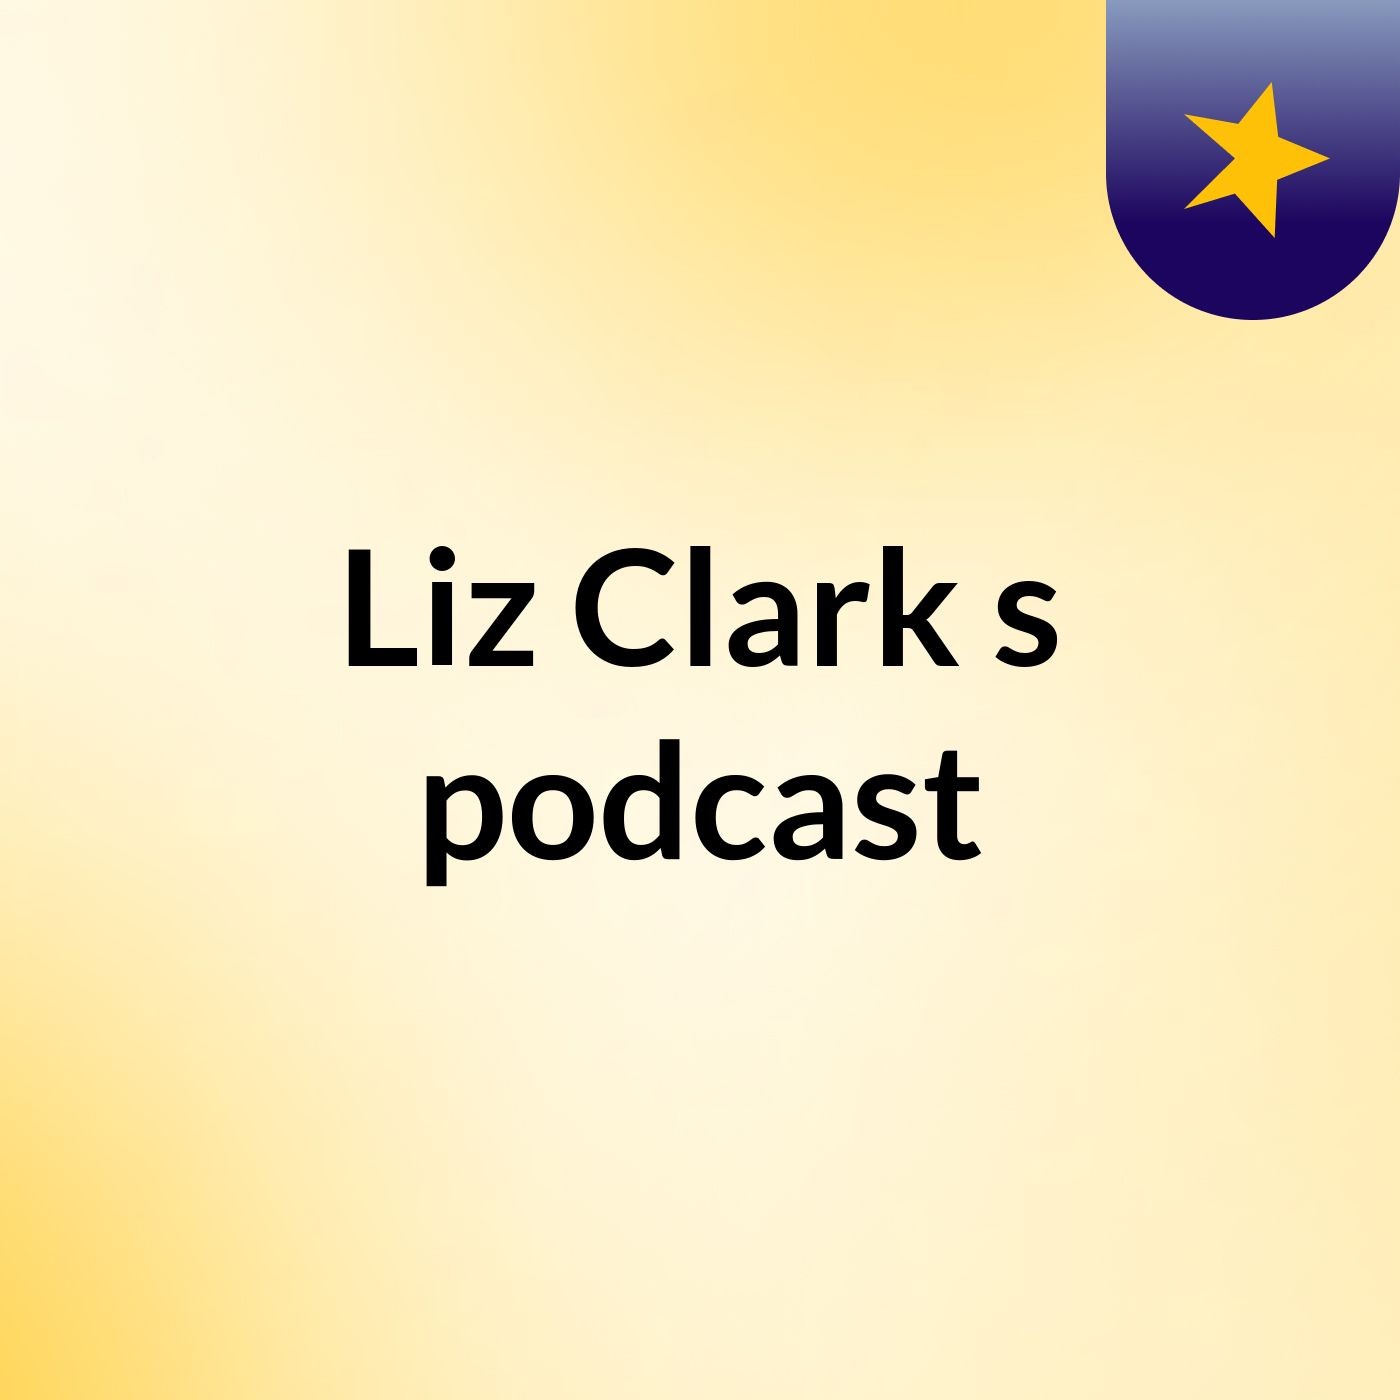 Liz Clark's podcast